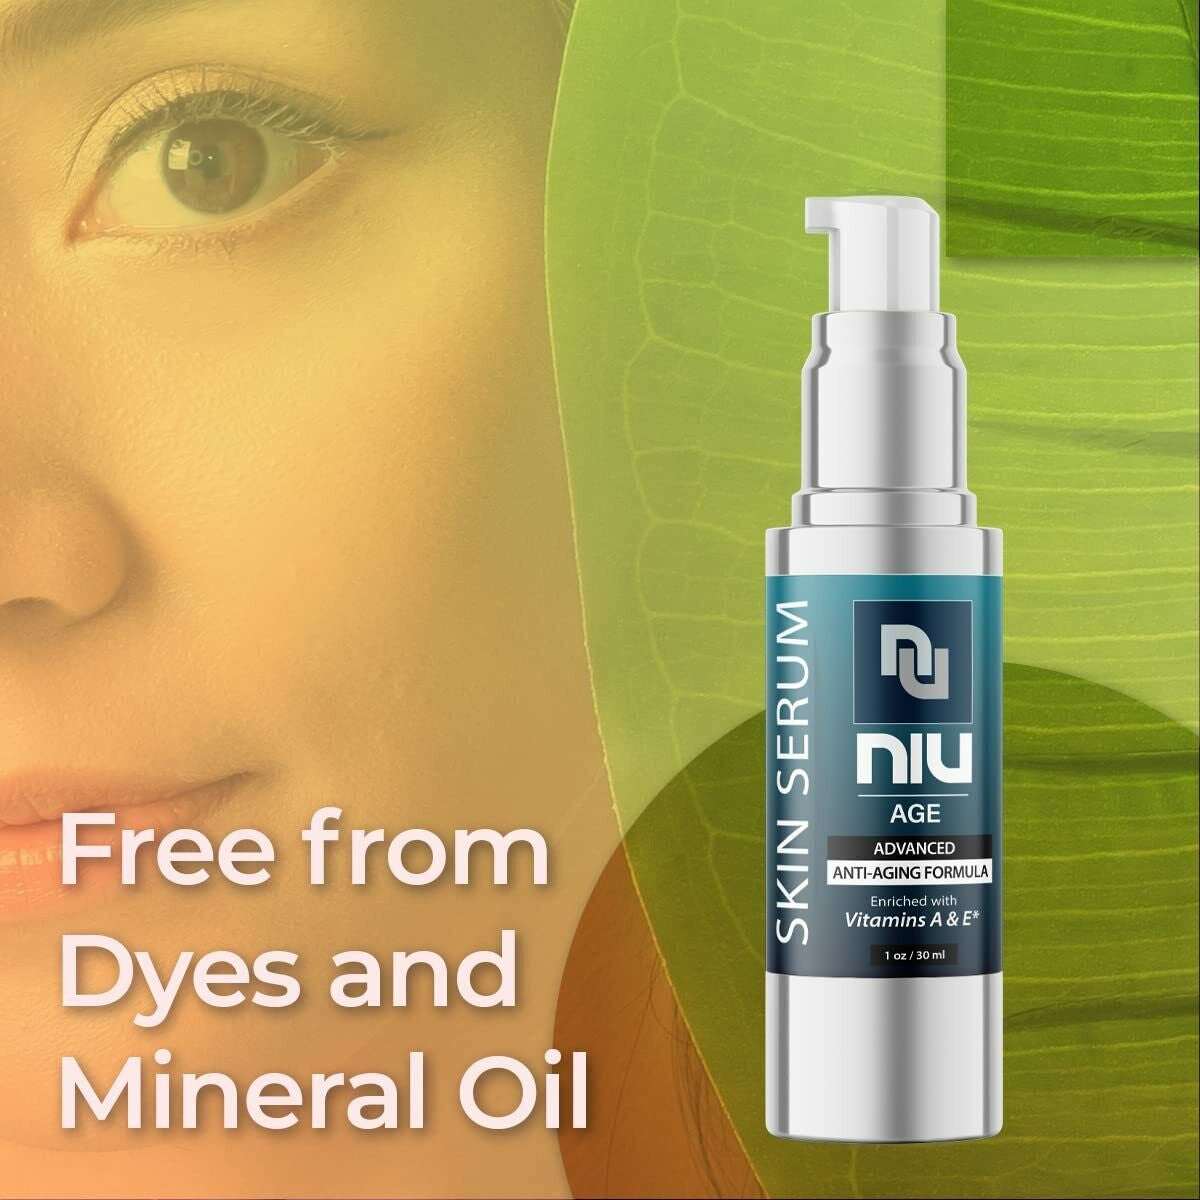 2-Niu Age Skin Serum for Wrinkles, Anti-aging Solution